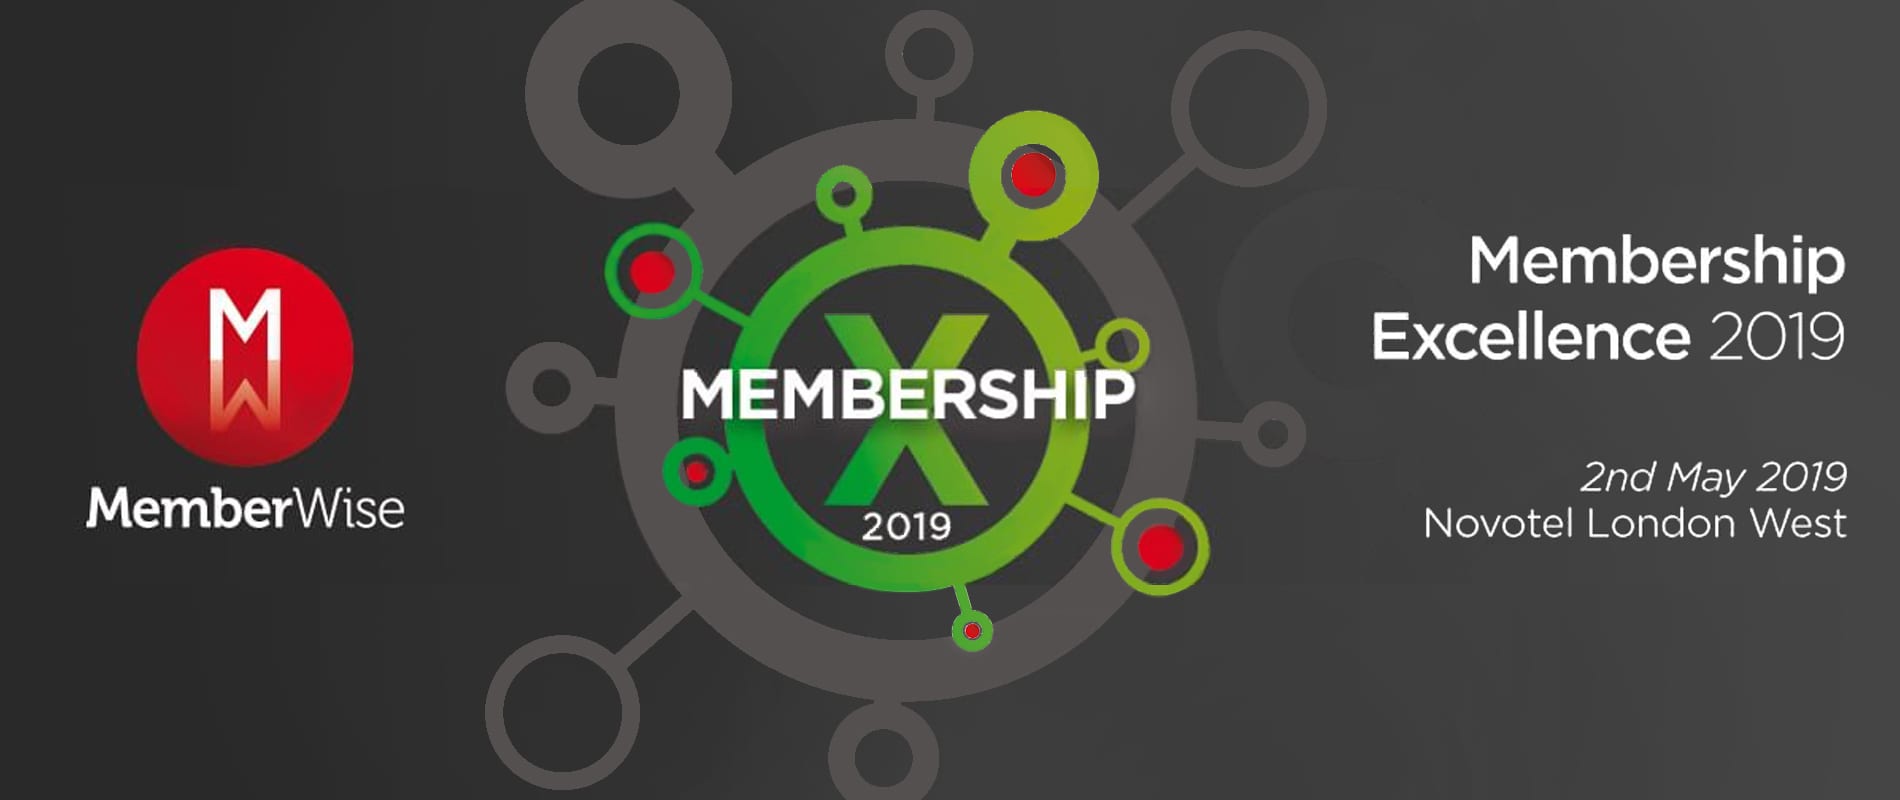 Memberwise Member Excellence 2019 banner